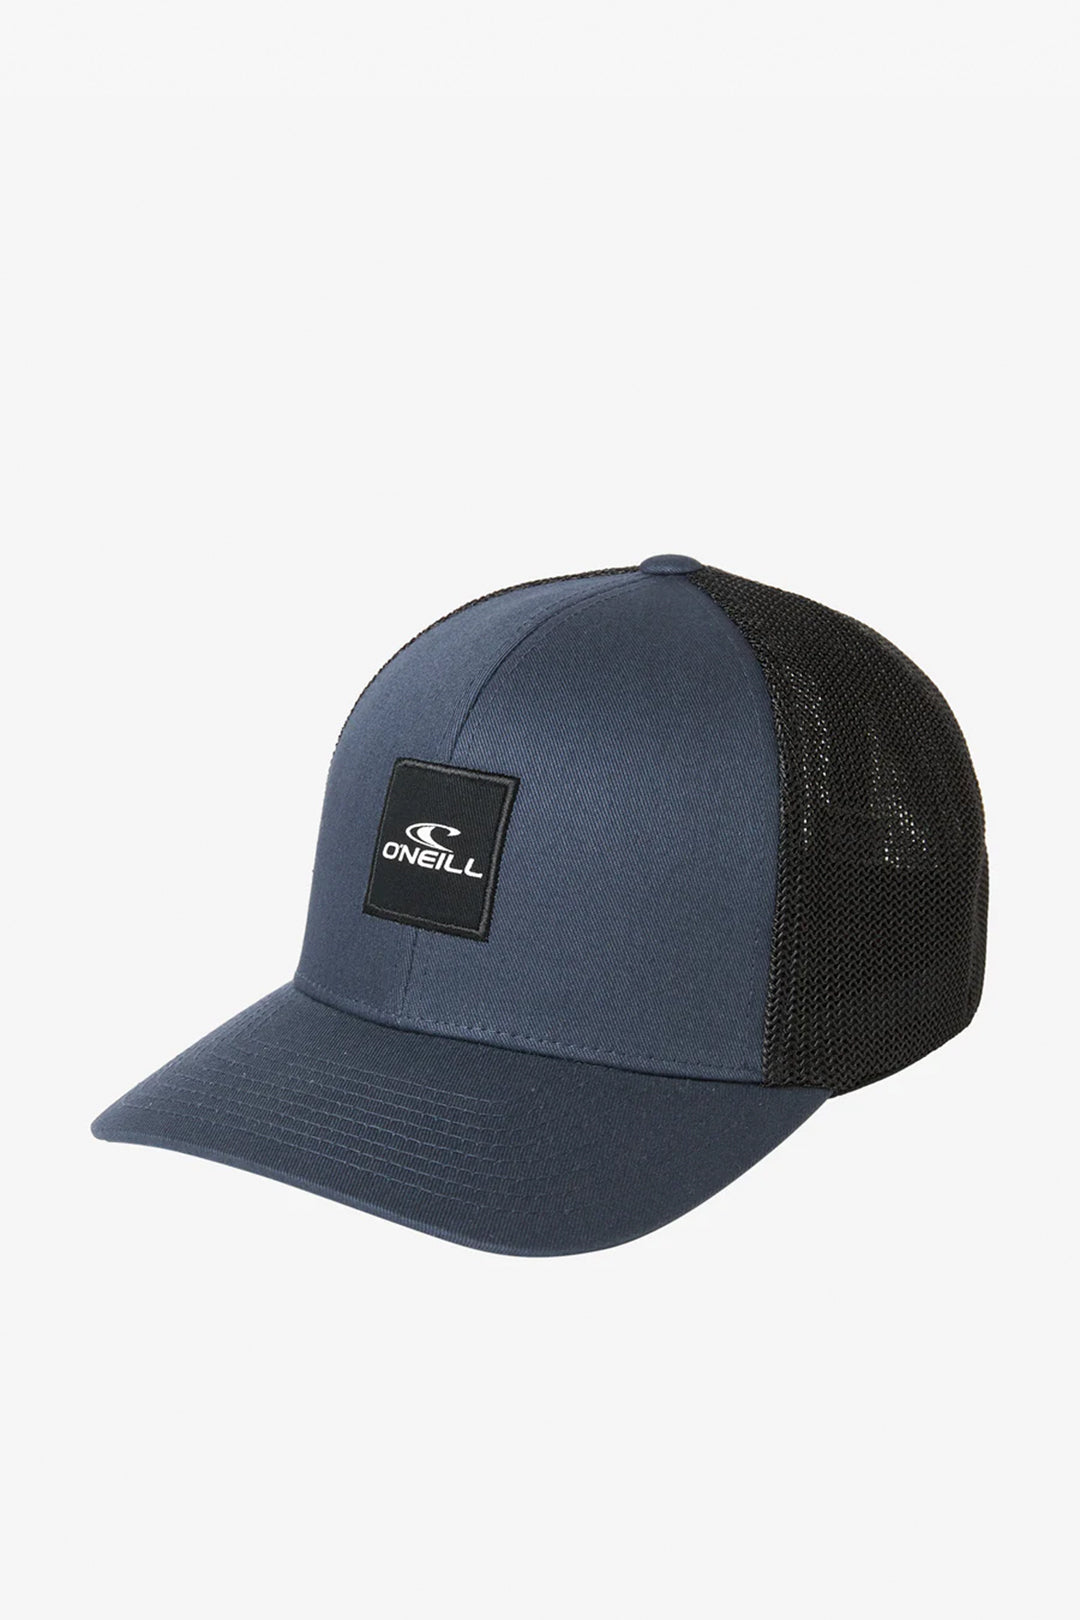 O'Neill cap in Navy color